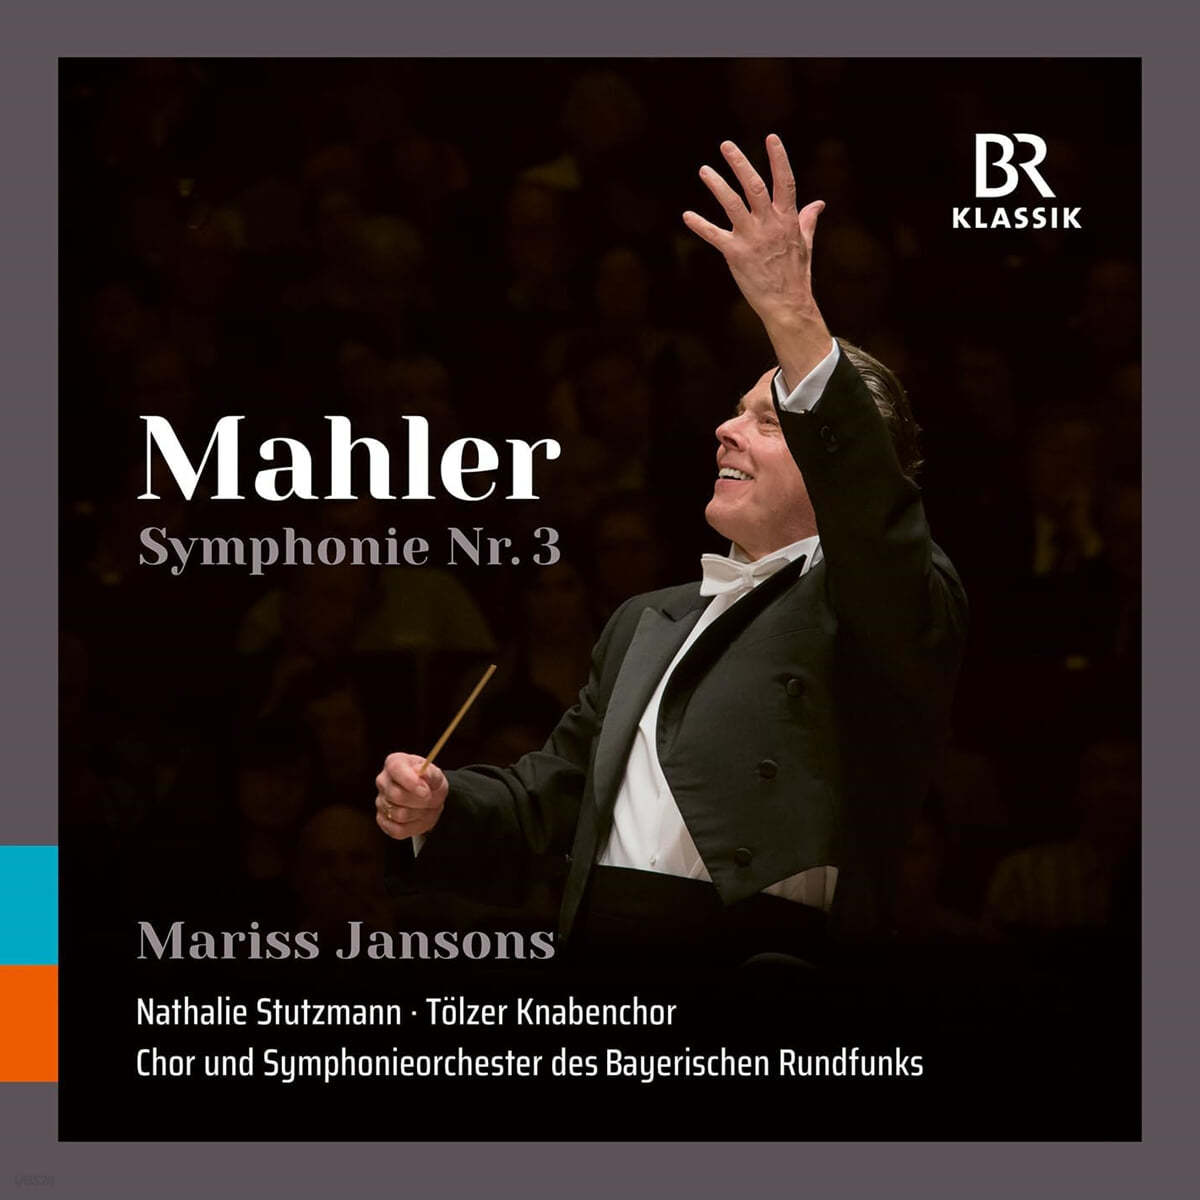 Mariss Jansons 말러: 교향곡 3번 (Mahler: Symphony No. 3)